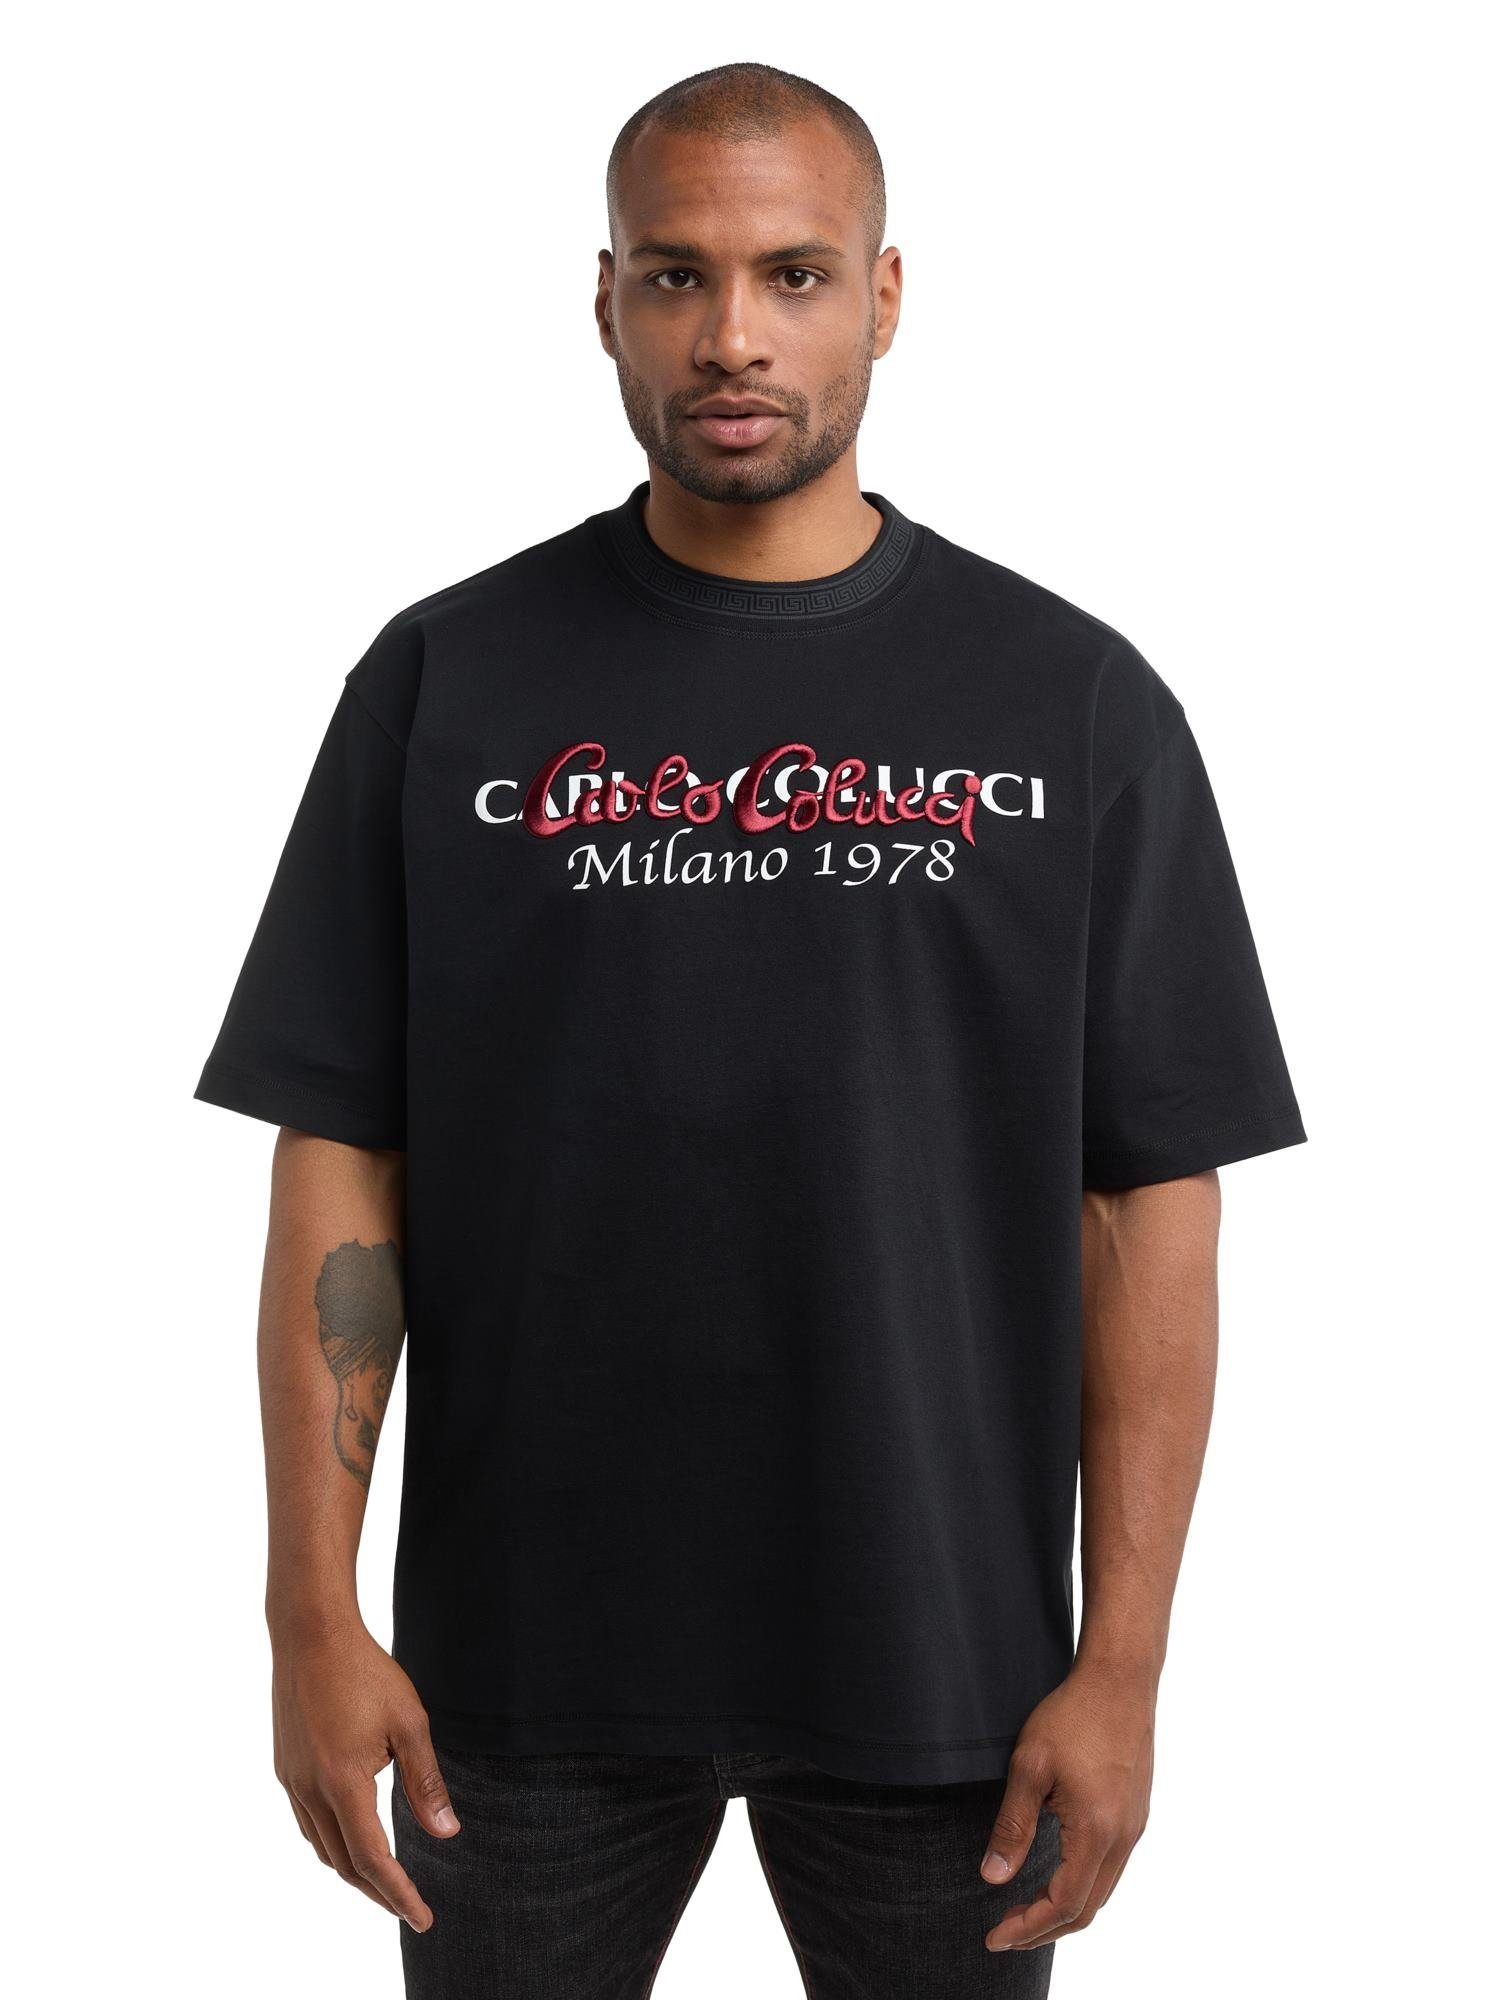 Stafeni Schwarz T-Shirt De COLUCCI CARLO